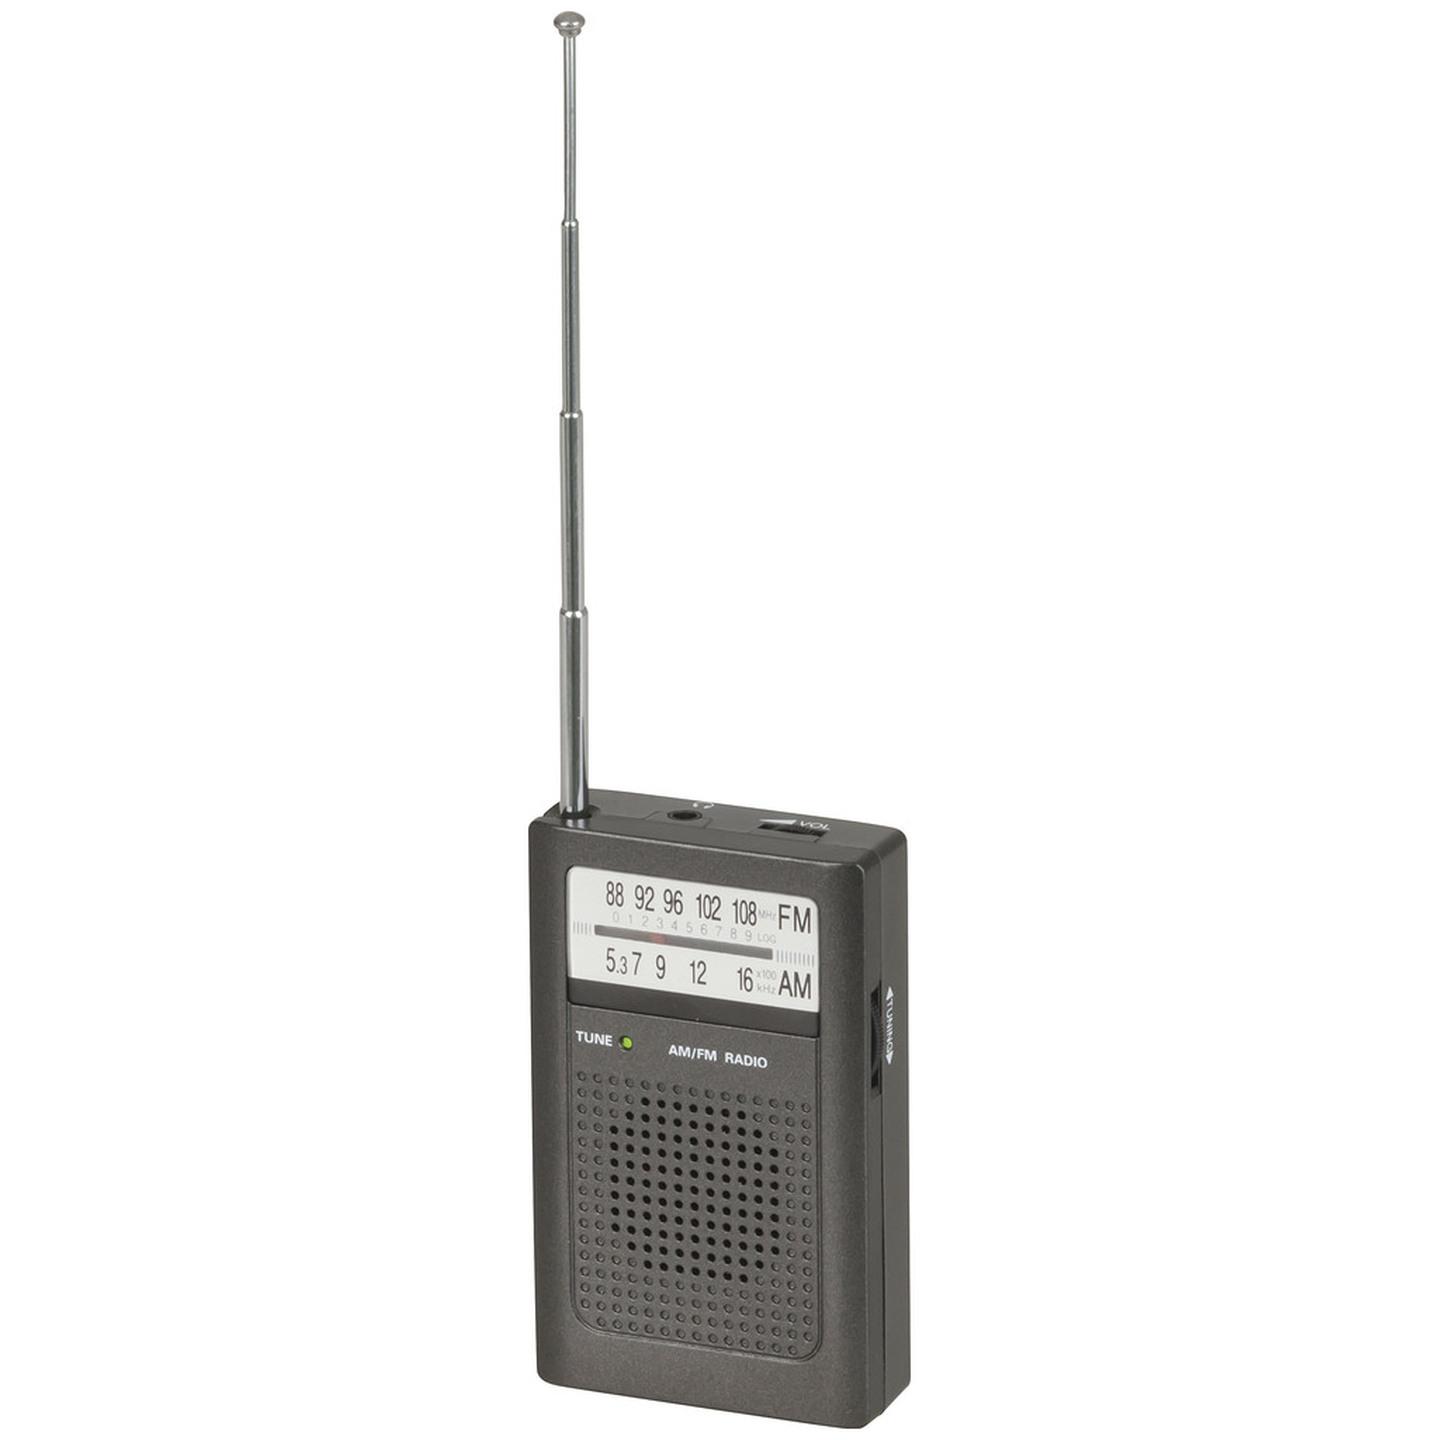 Digitech Portable AM/FM Transistor Radio